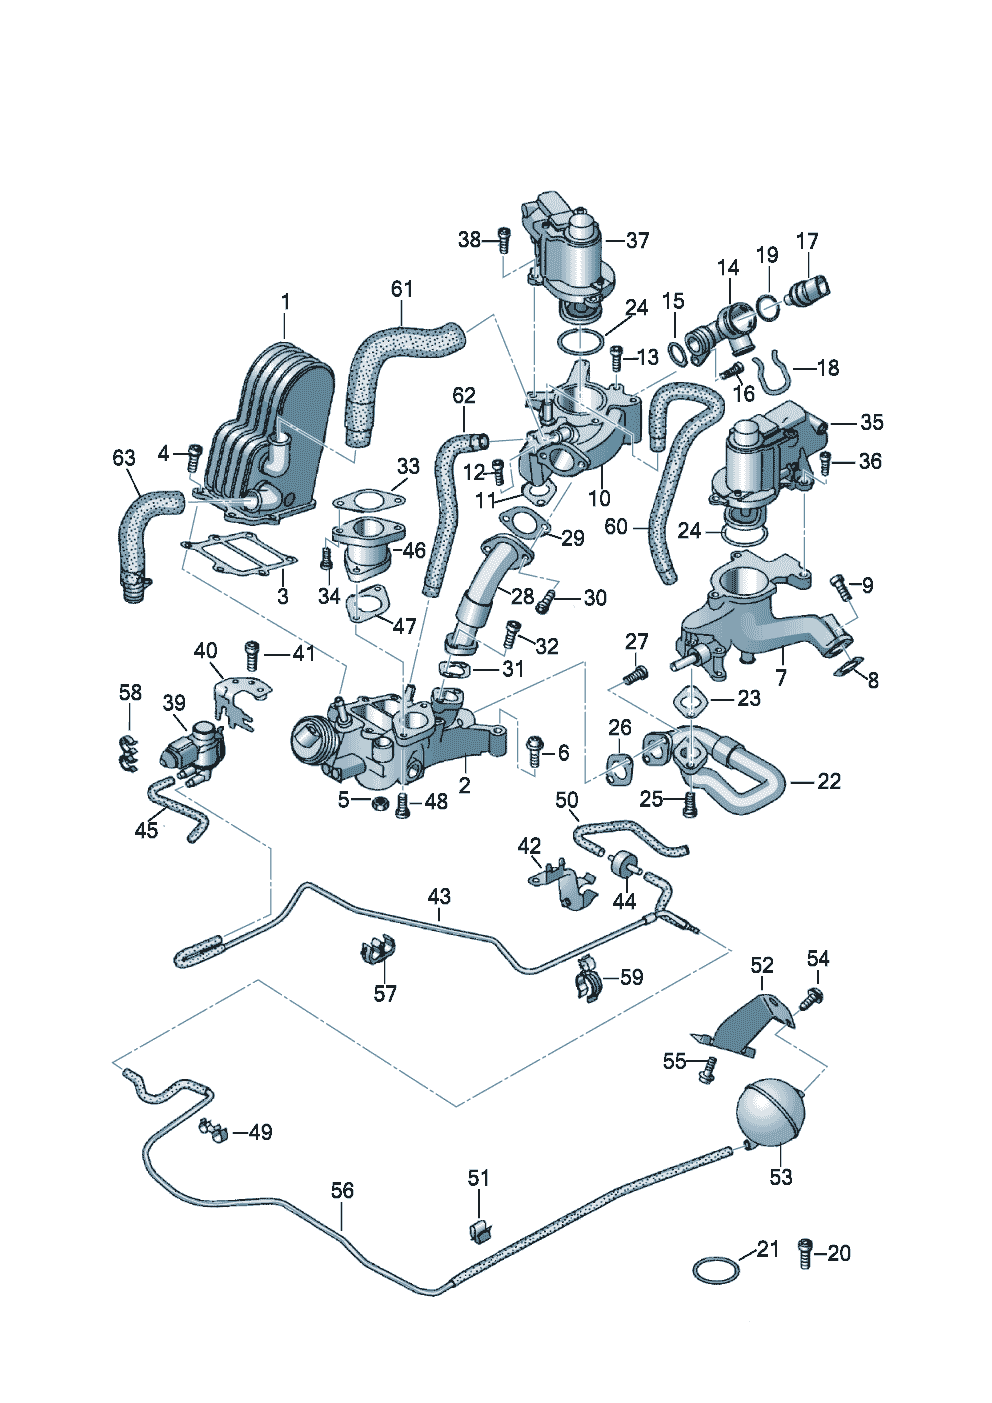 UnterdruckanlageAbgasrückführung 4,2Ltr. - Audi A8/S8 quattro - a8q